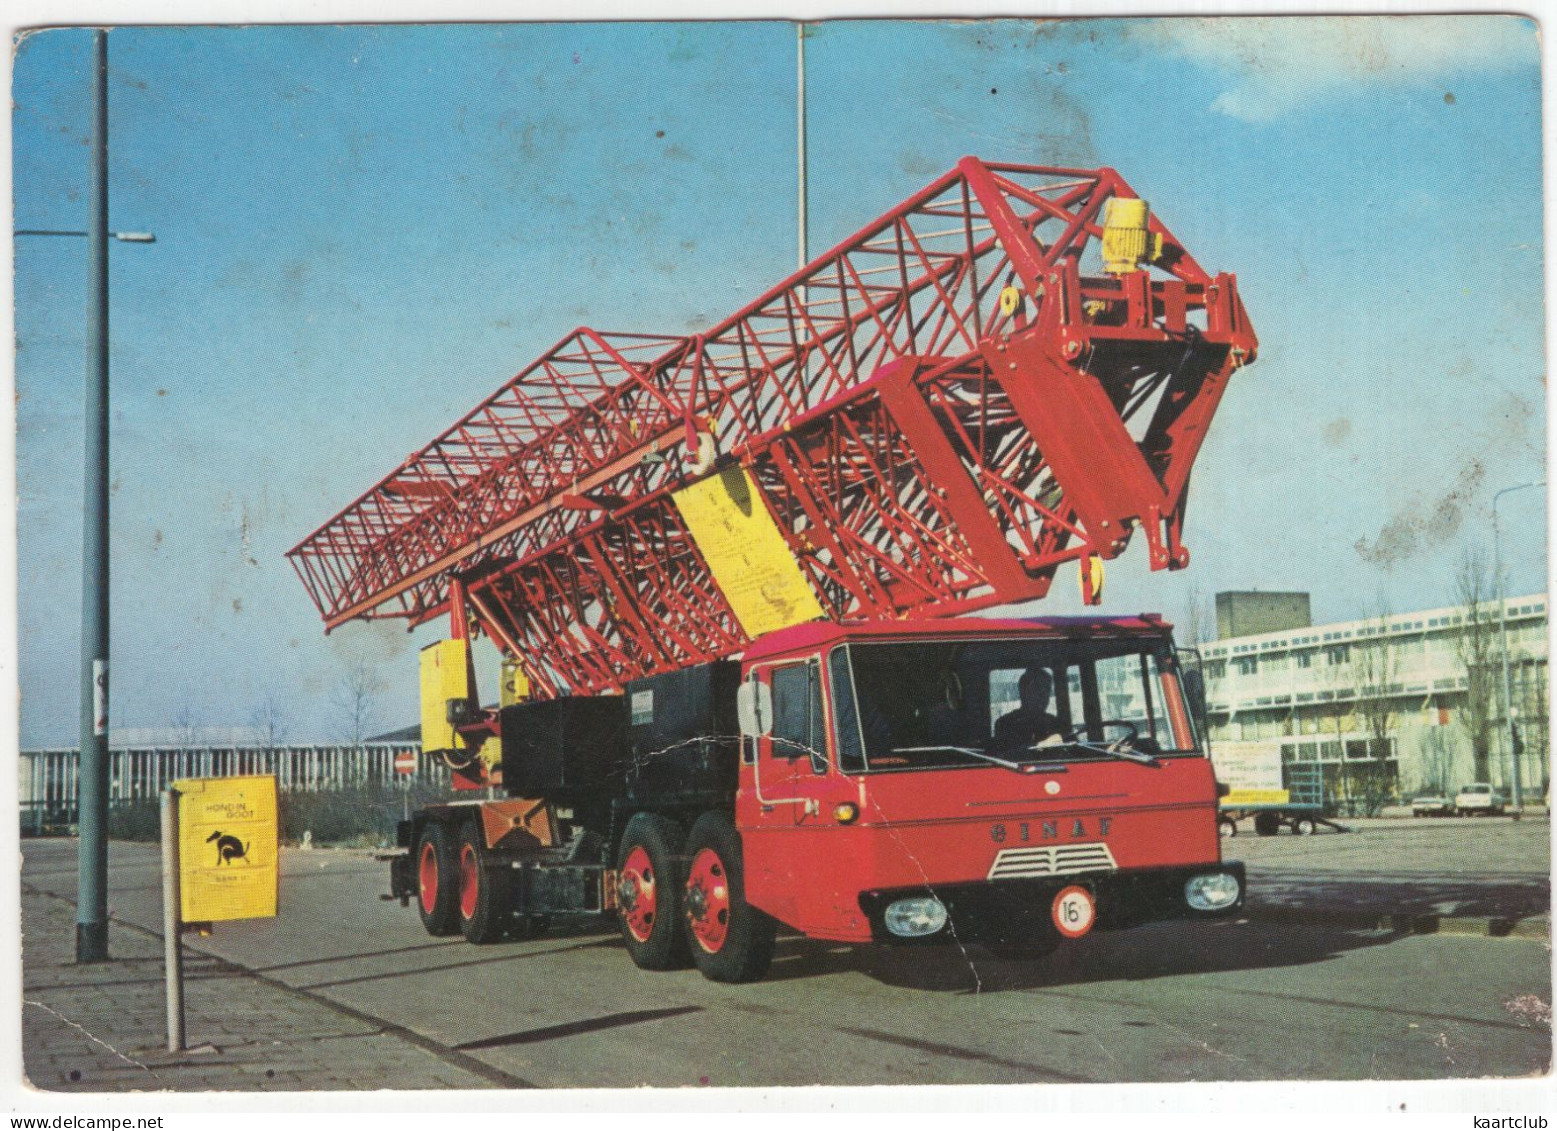 KRØLL K35 LOOPKATKRAAN Op GINAF TRUCKCHASSIS 8x6 - (Niertrasz NV, Bouwmachines, Amsterdam) - Transporter & LKW